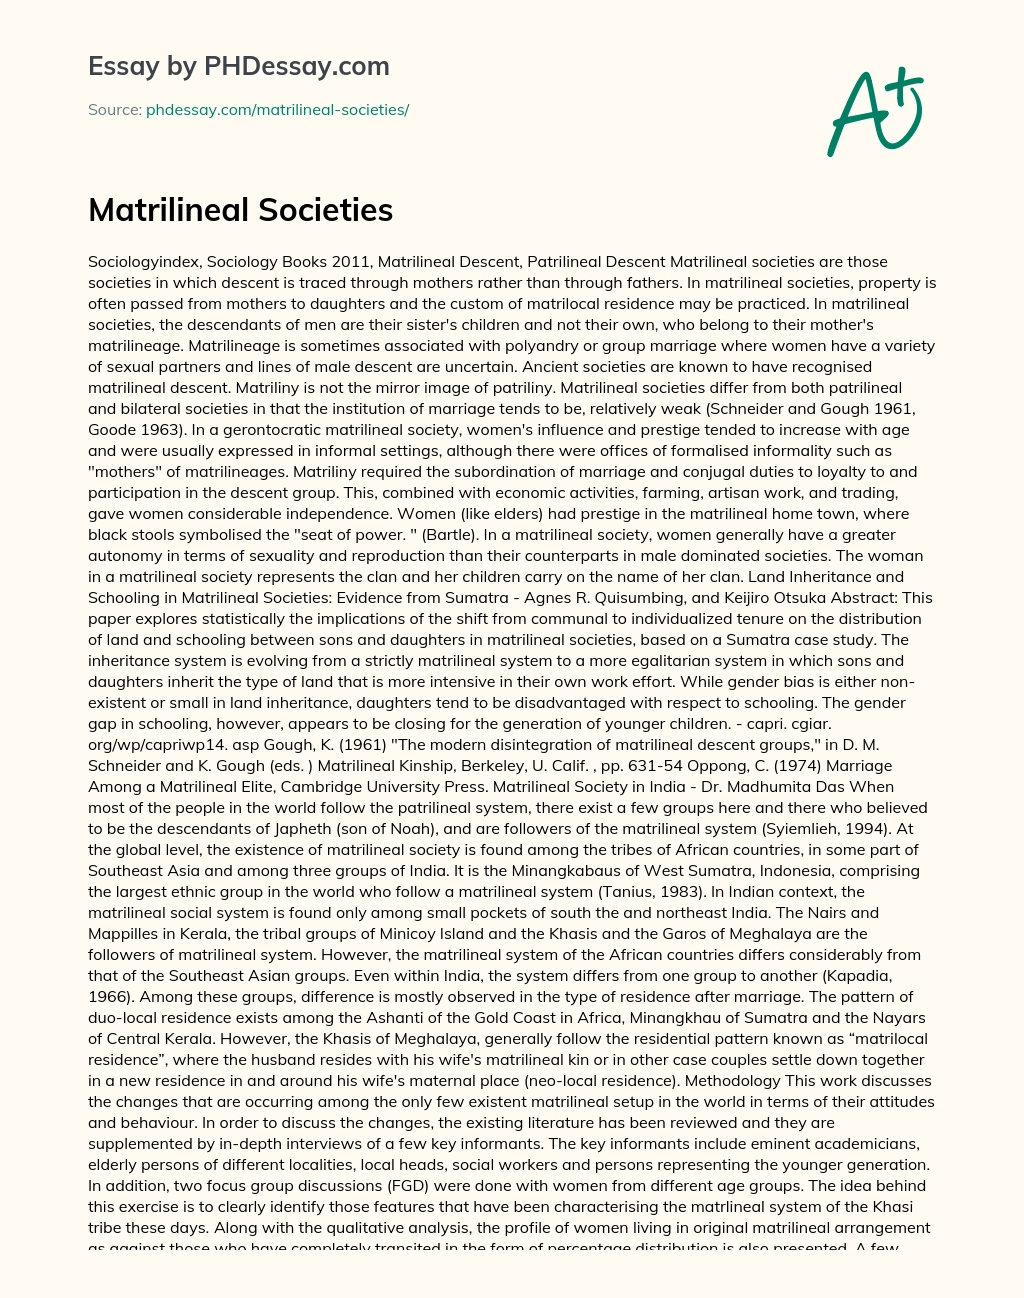 Matrilineal Societies essay